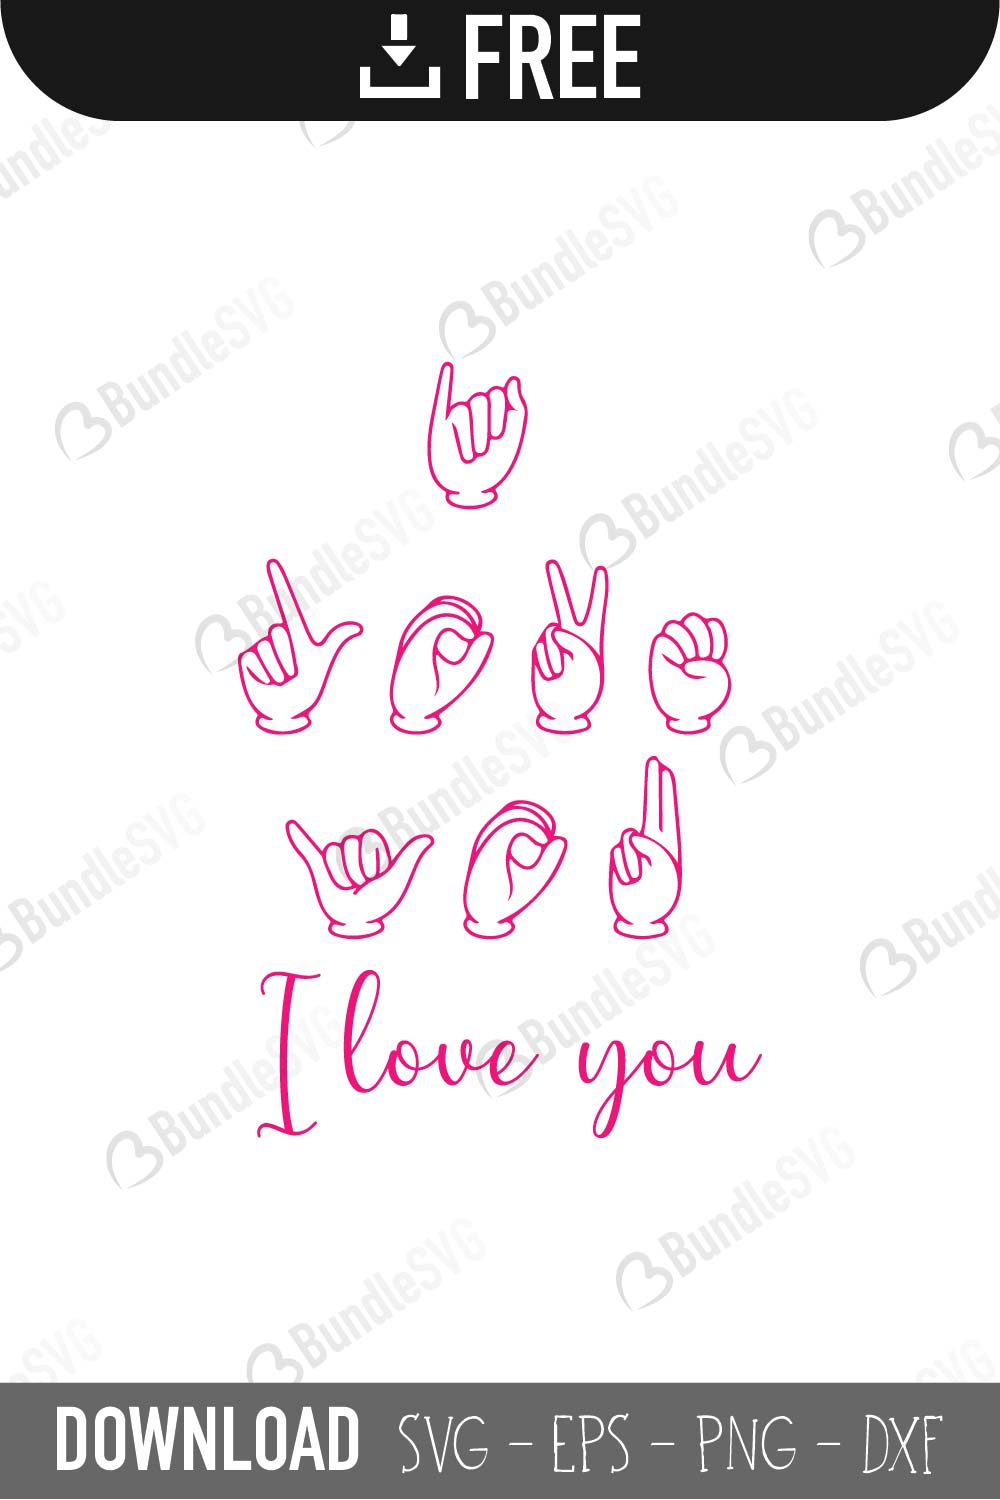 I Love You Sign Language SVG Cut Files Free Download | BundleSVG